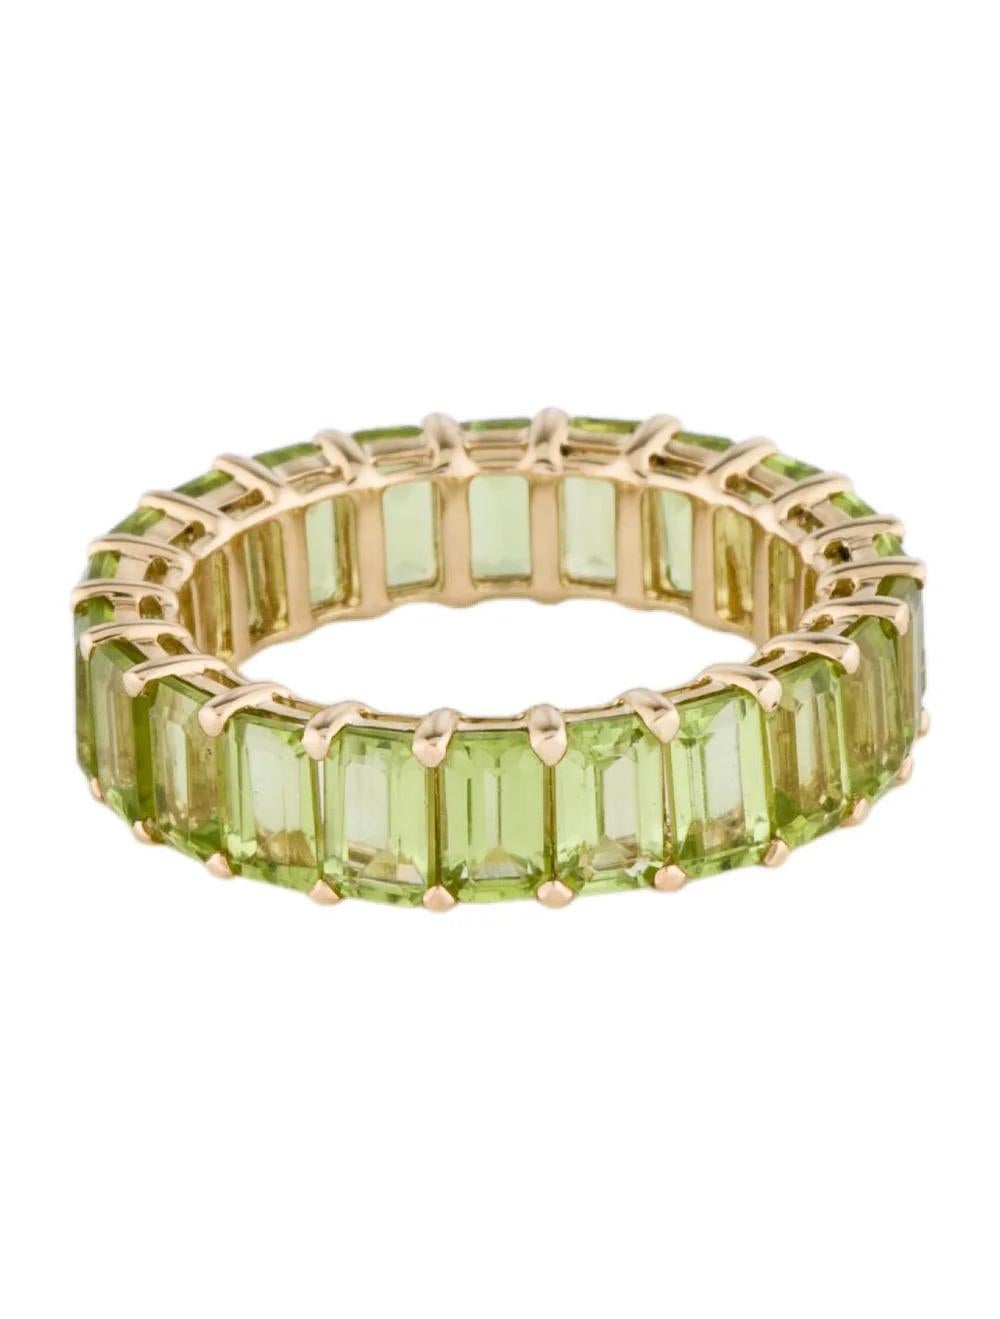 Emerald Cut Designer 14K Peridot Eternity Band Ring - 7.17ctw, Size 7, Green Gemstone Design